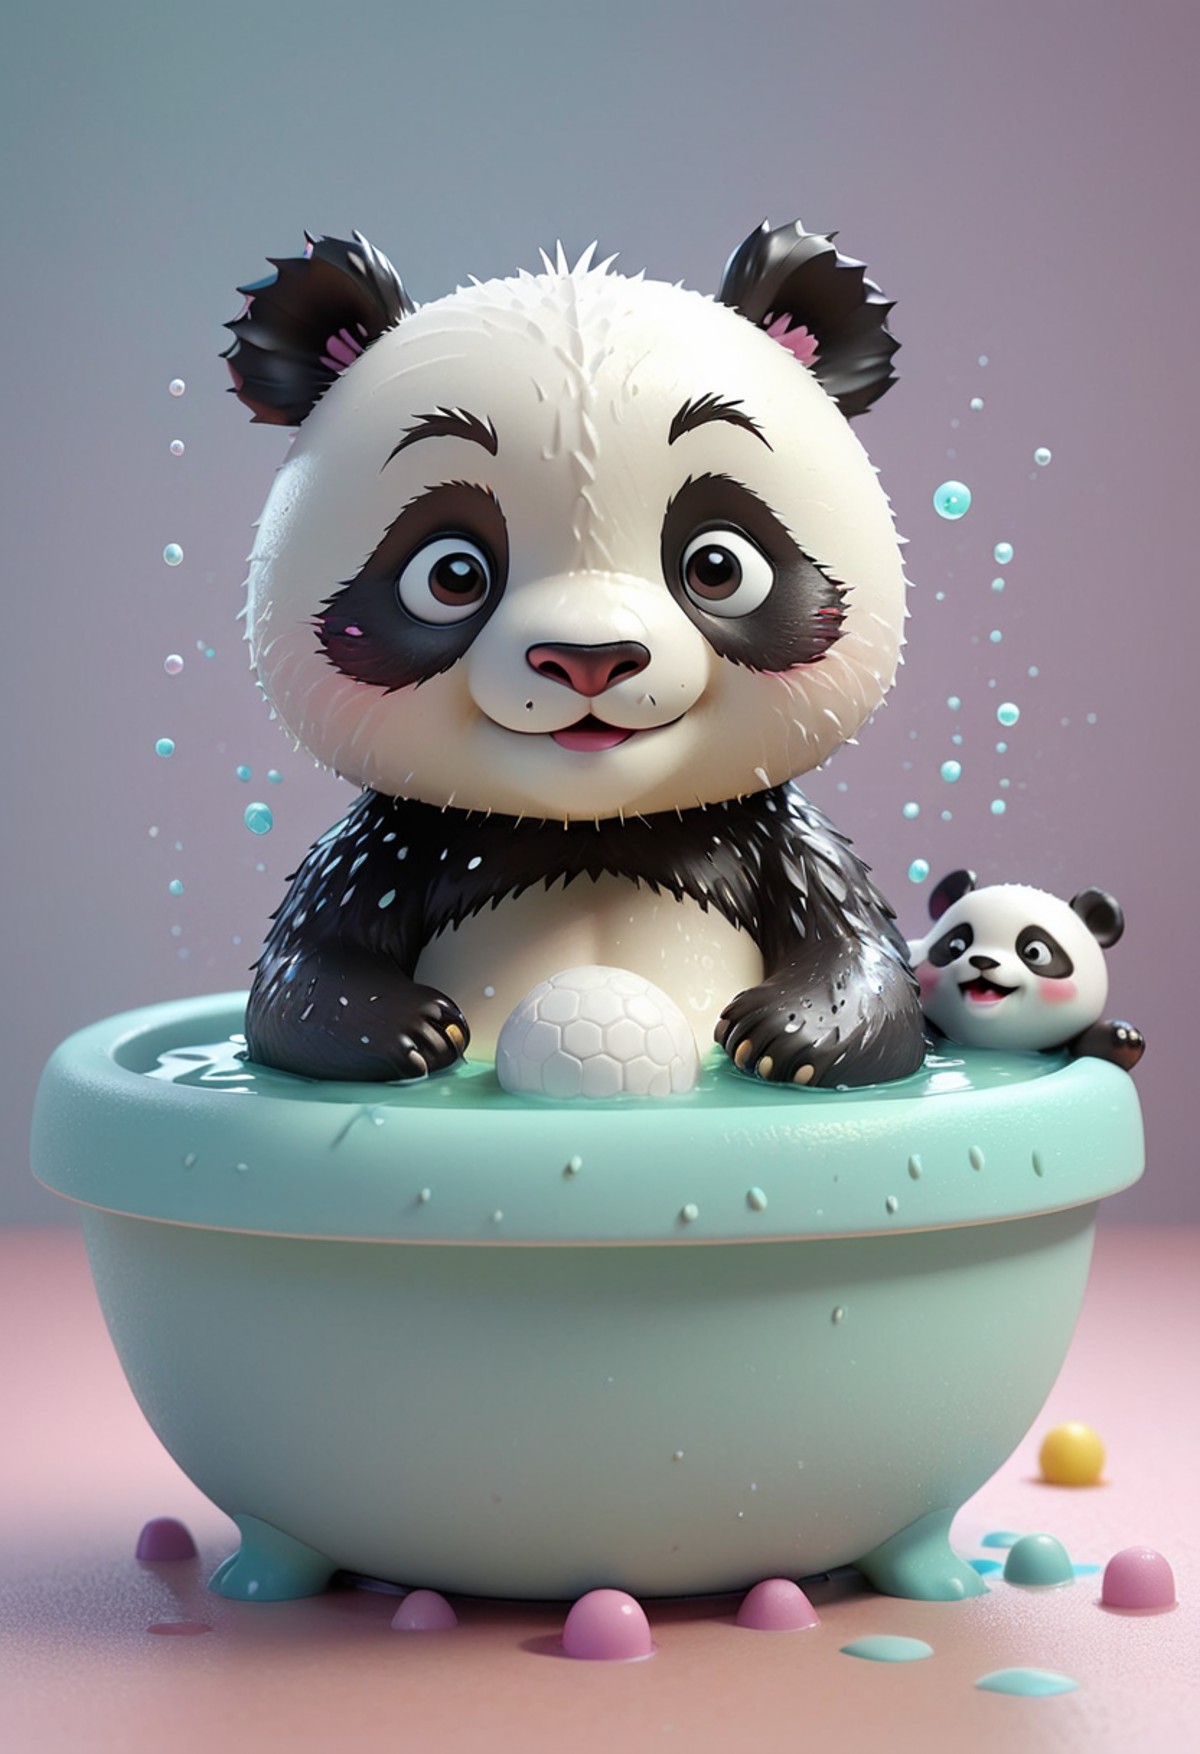 miniture, tiny cute panda ball toy, inside of bathtub, plastic texture, soft smooth lighting, soft pastel colors, skottie ...